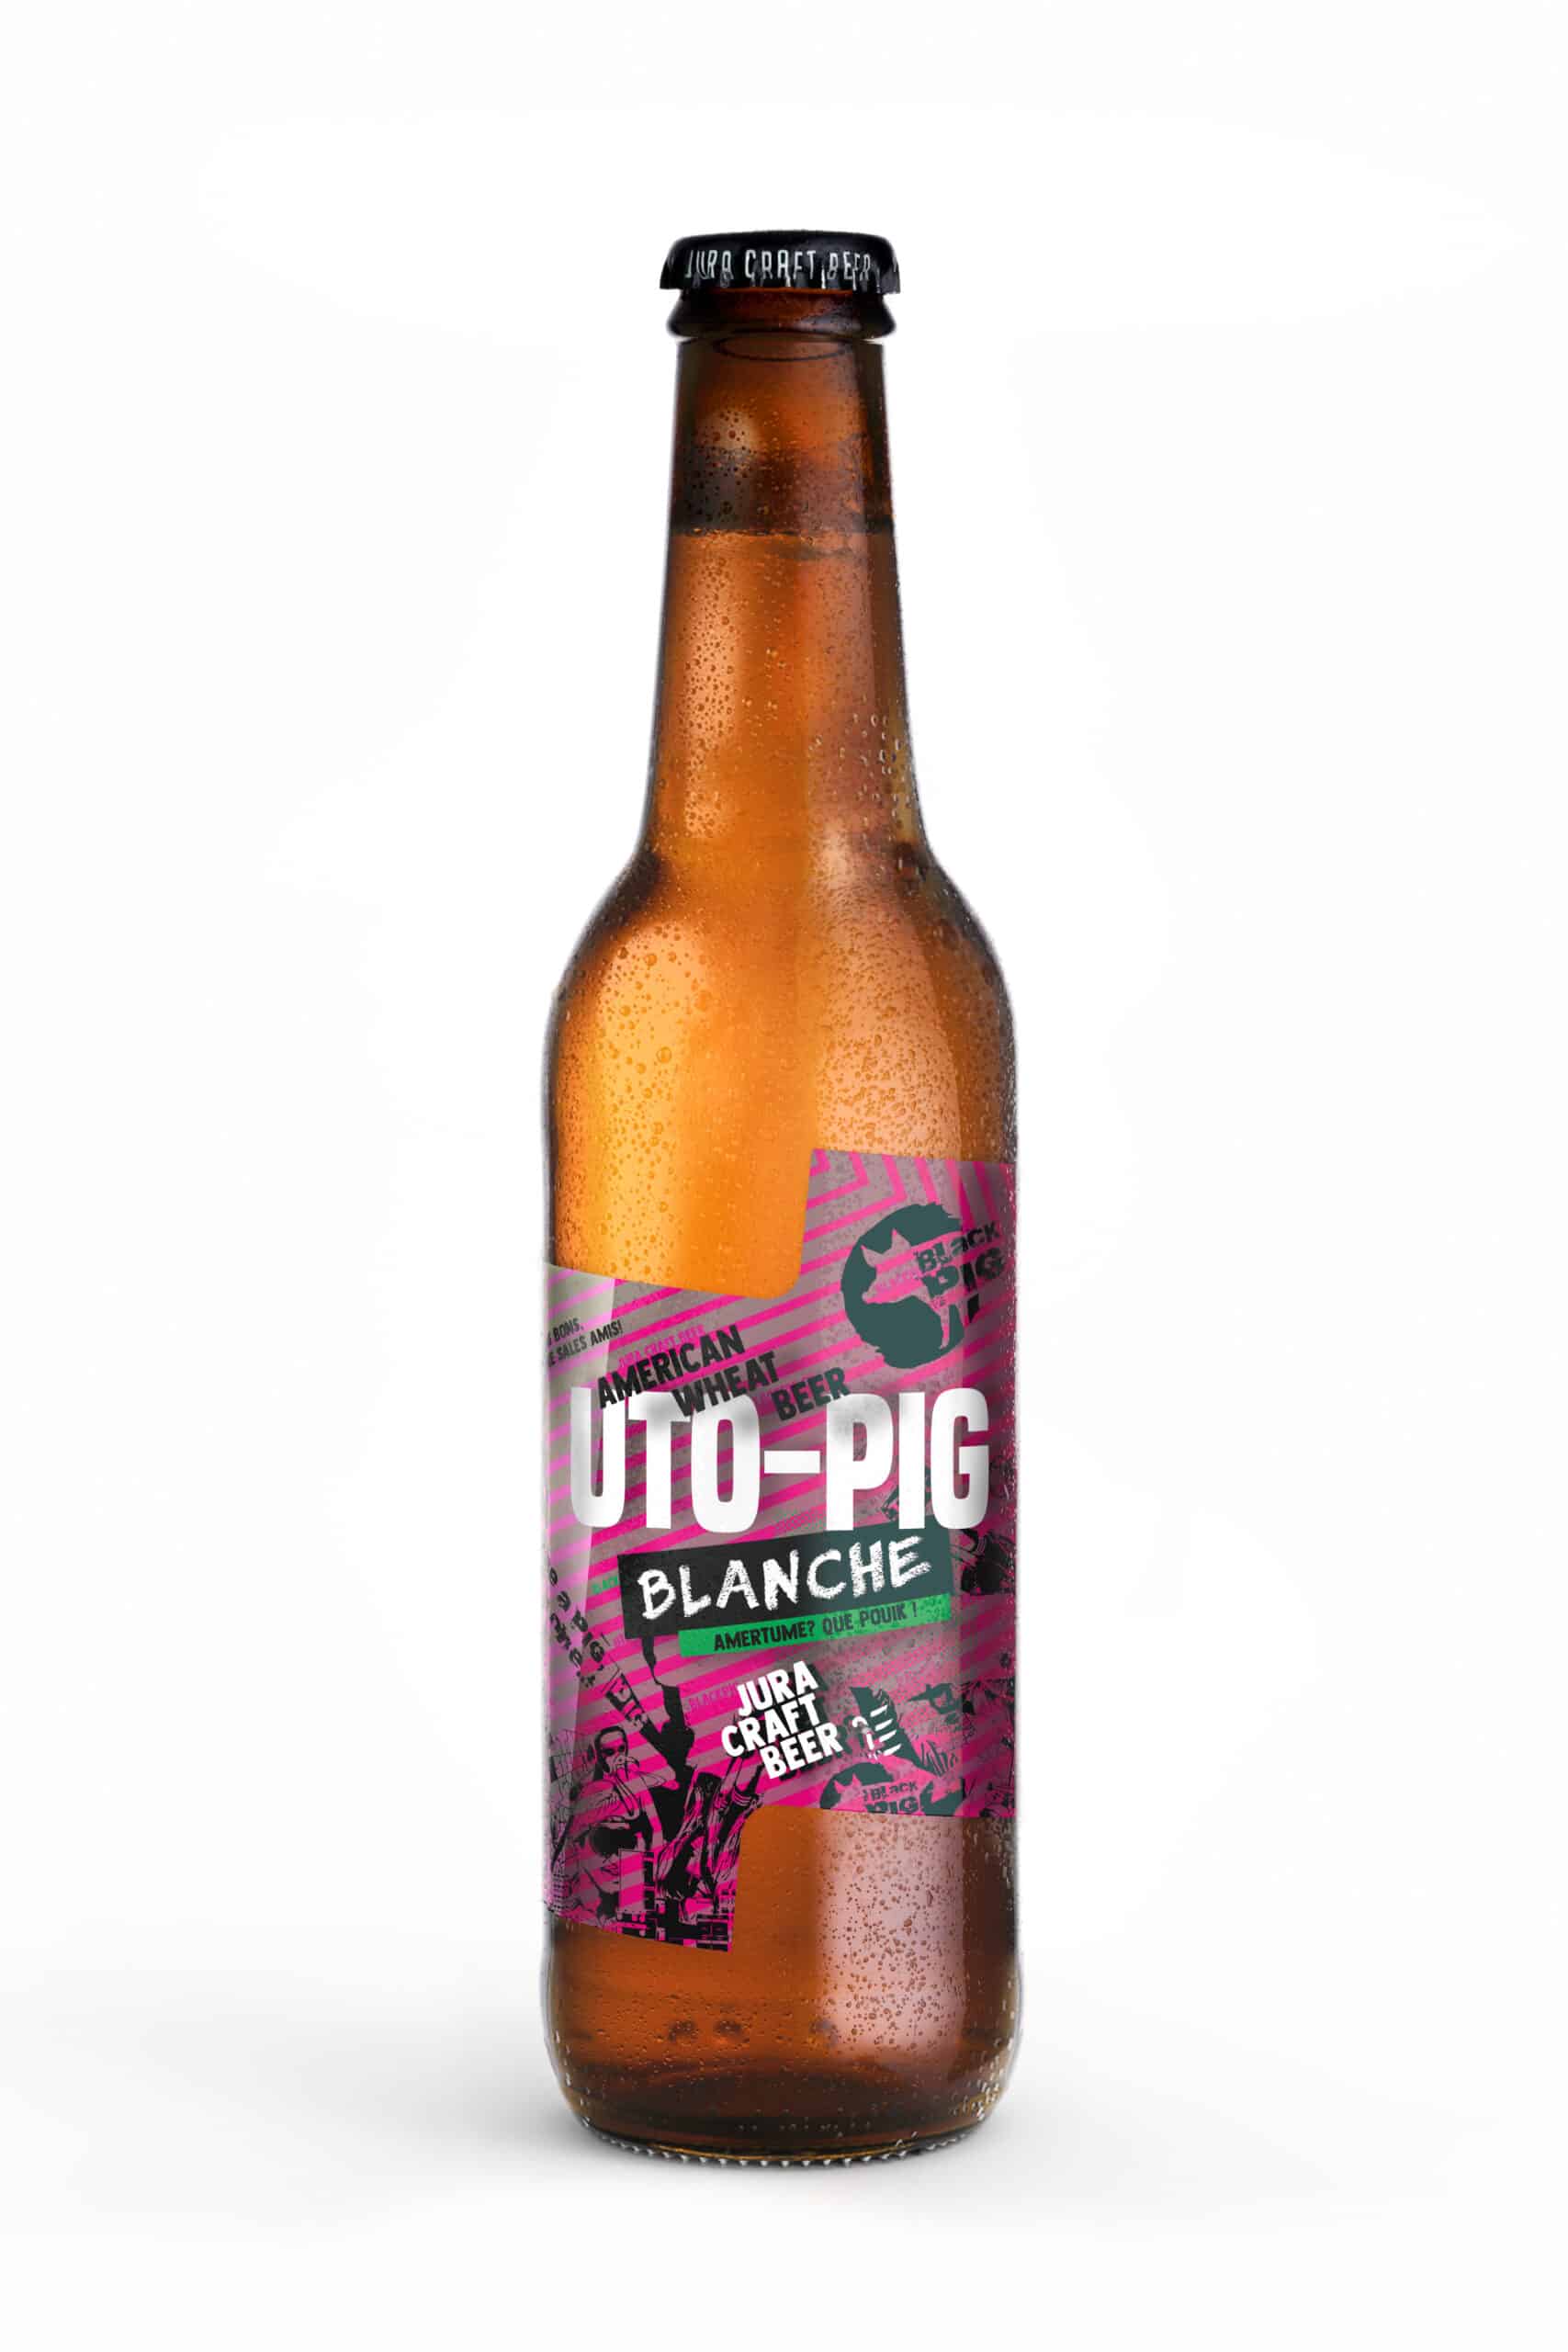 Bière BlackPig UTO-PIG  La Blanche - Local Prod